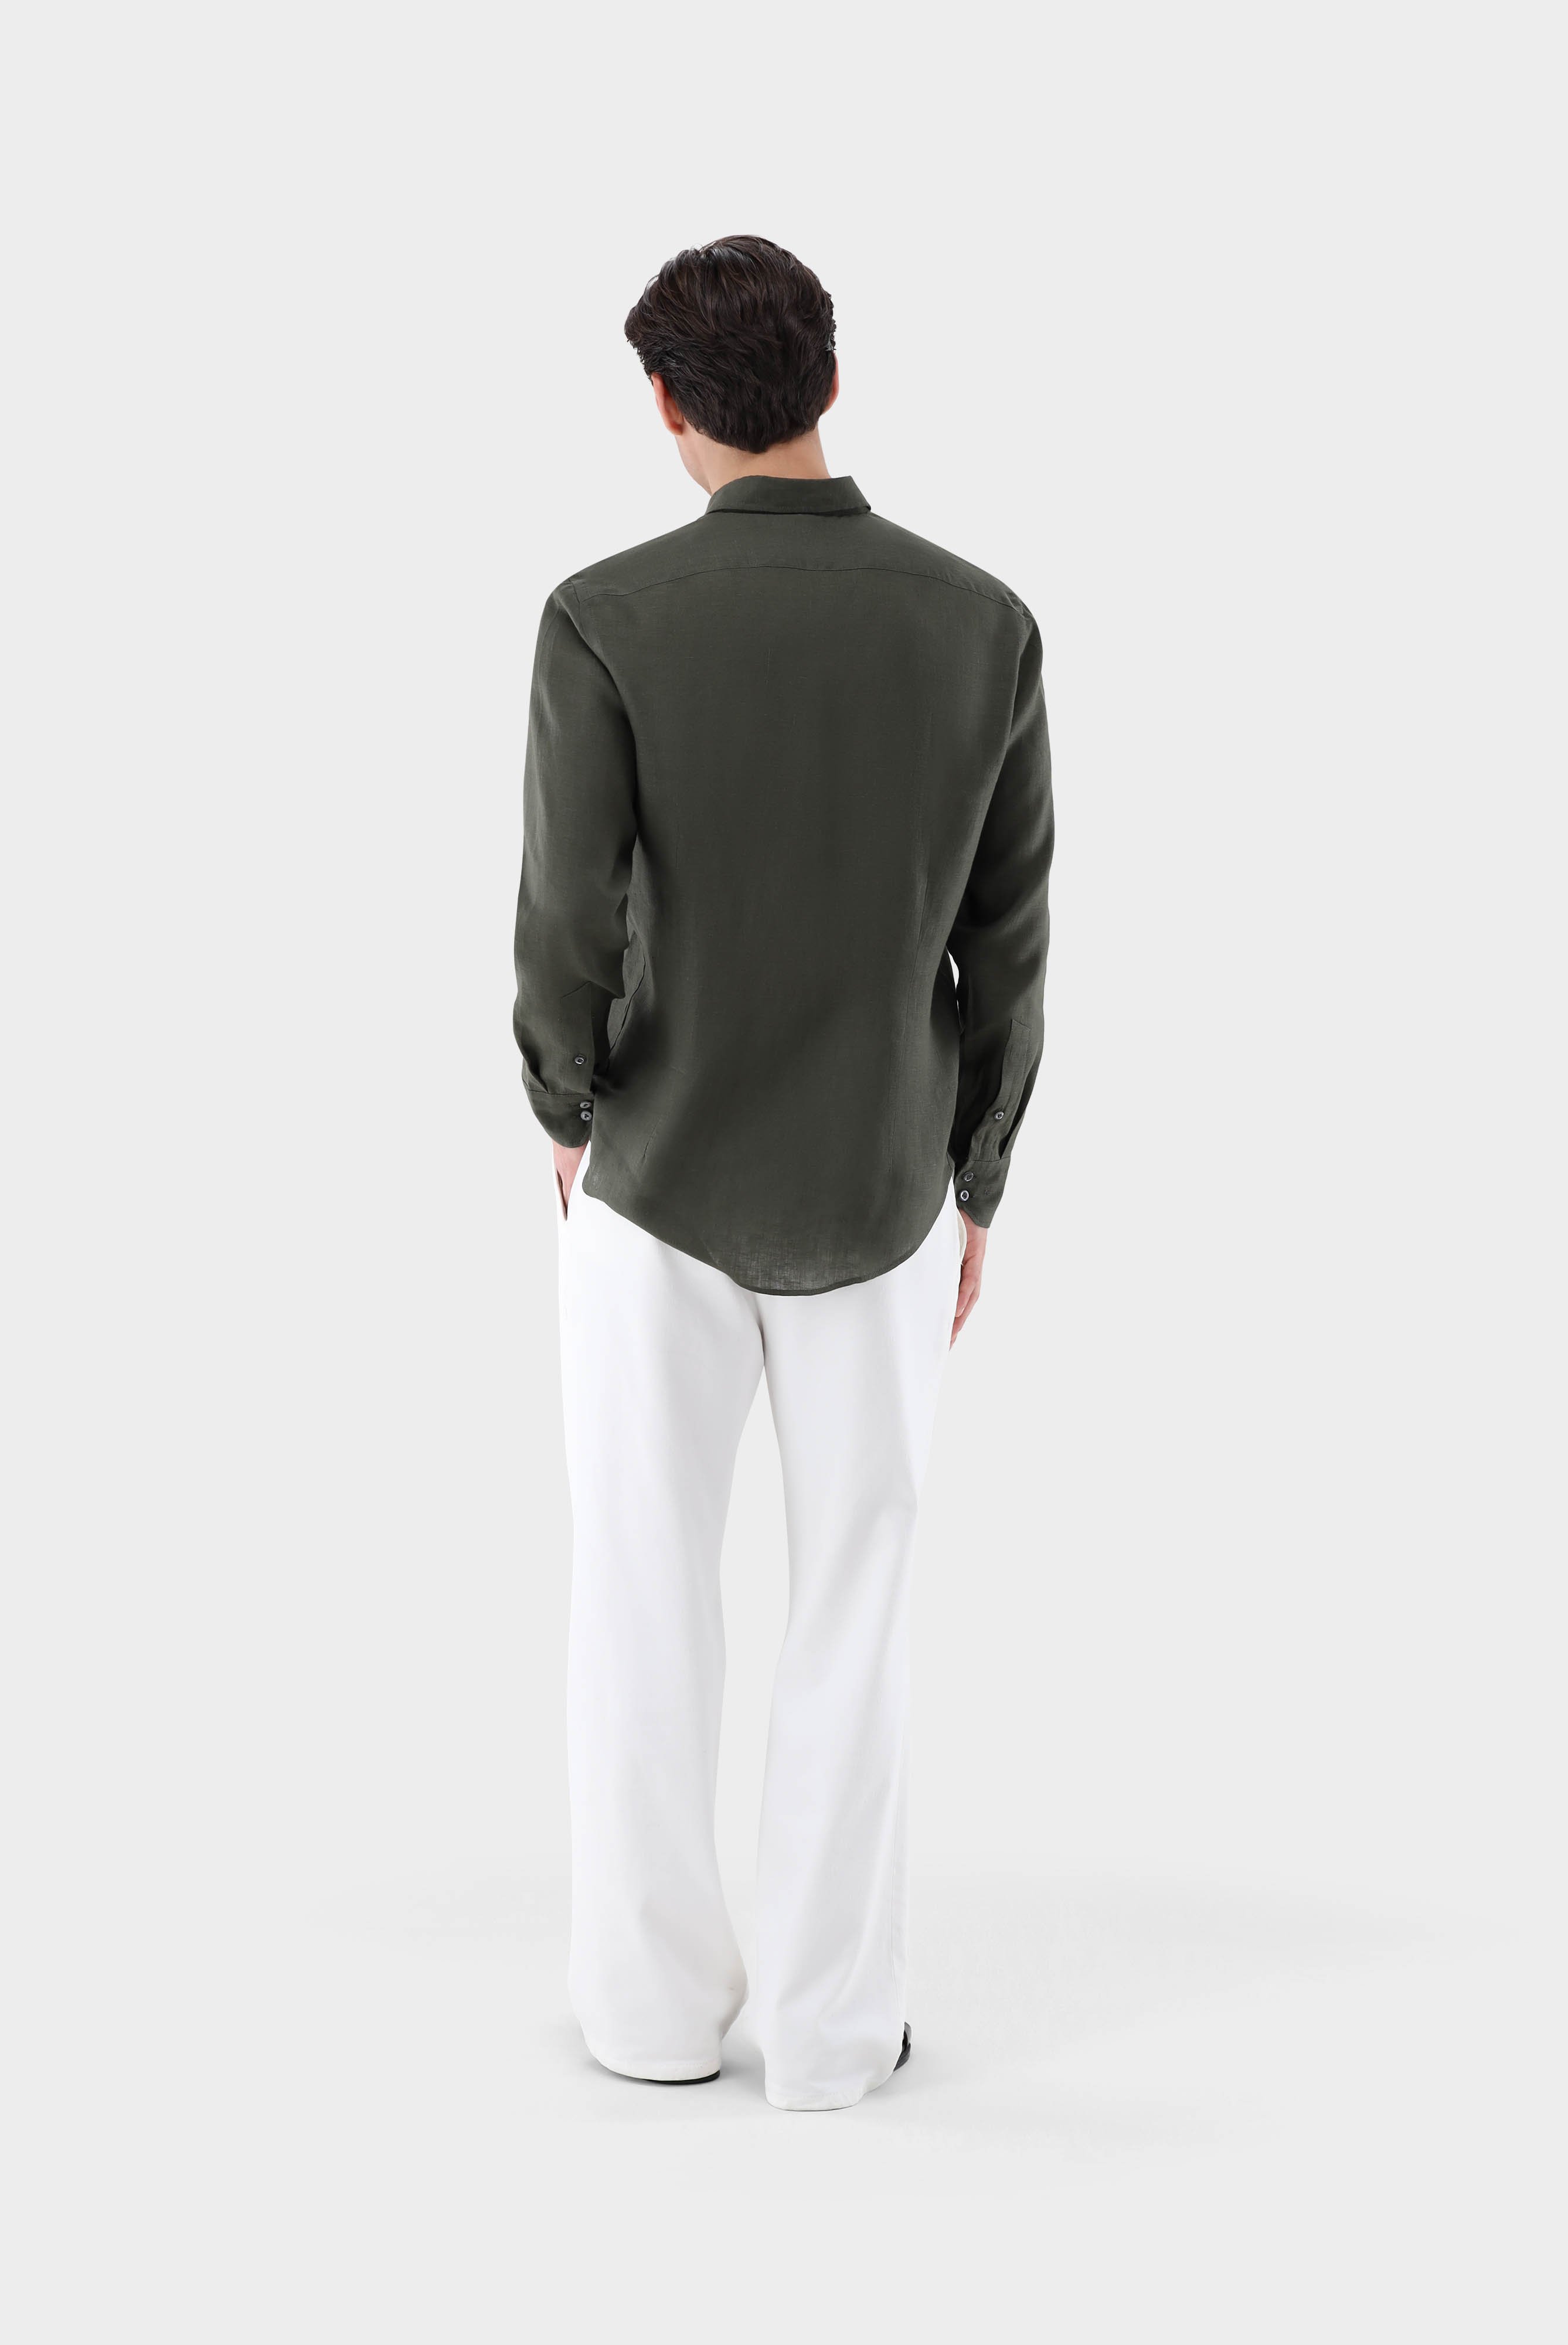 Casual Shirts+Linen Button-Down Collar Shirt+20.2013.9V.150555.990.41